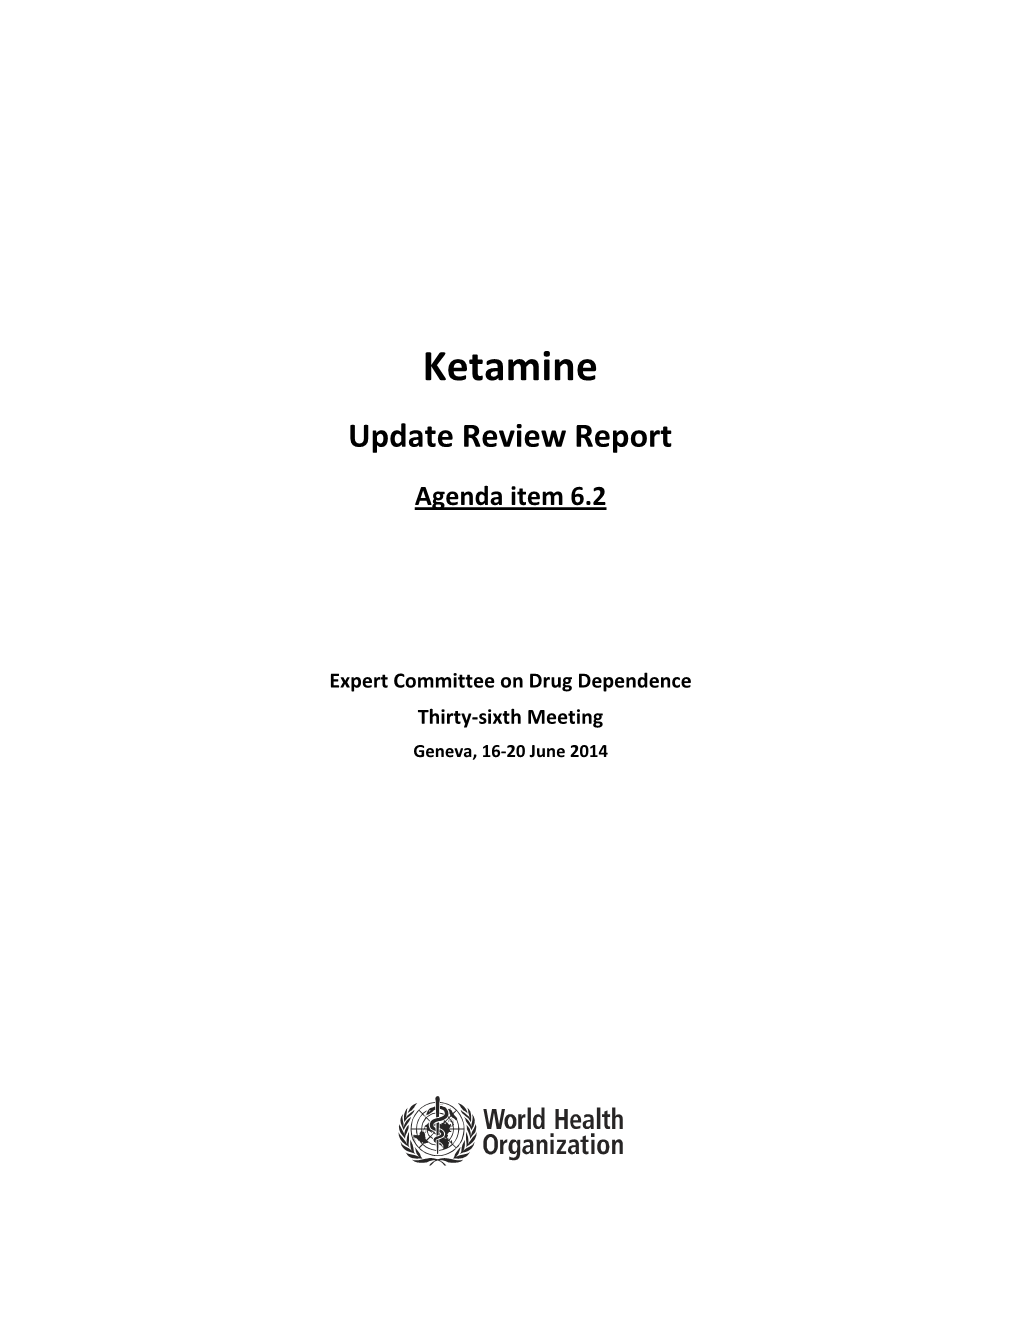 Ketamine Update Review Report